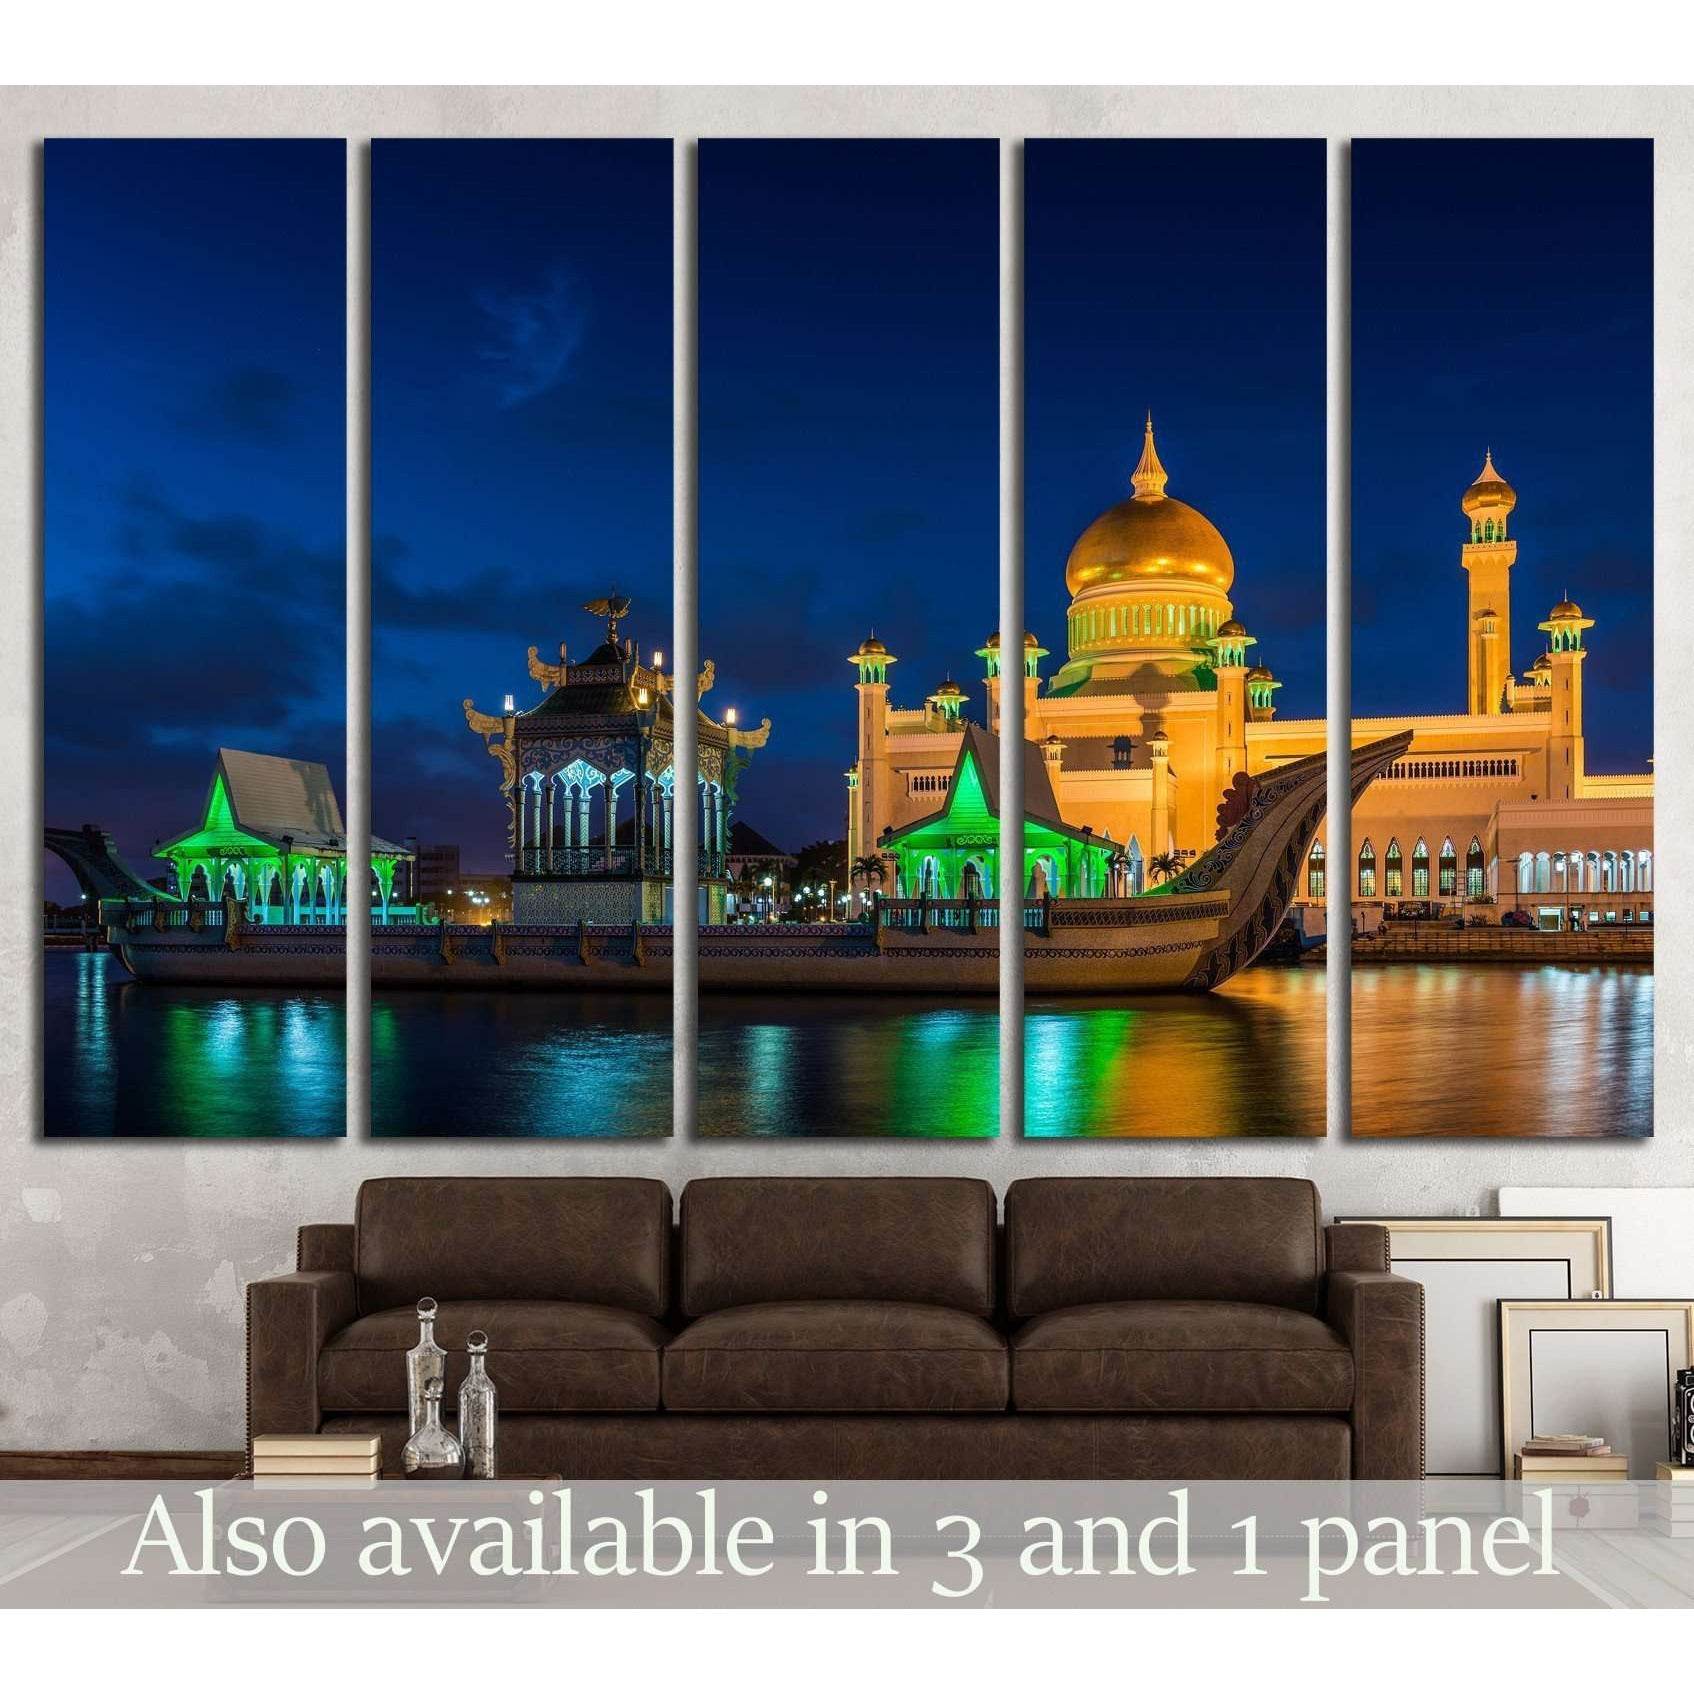 The Sultan Omar Ali Saifuddin Mosque in Bandar Seri Begawan, Brunei №1797 Ready to Hang Canvas Print